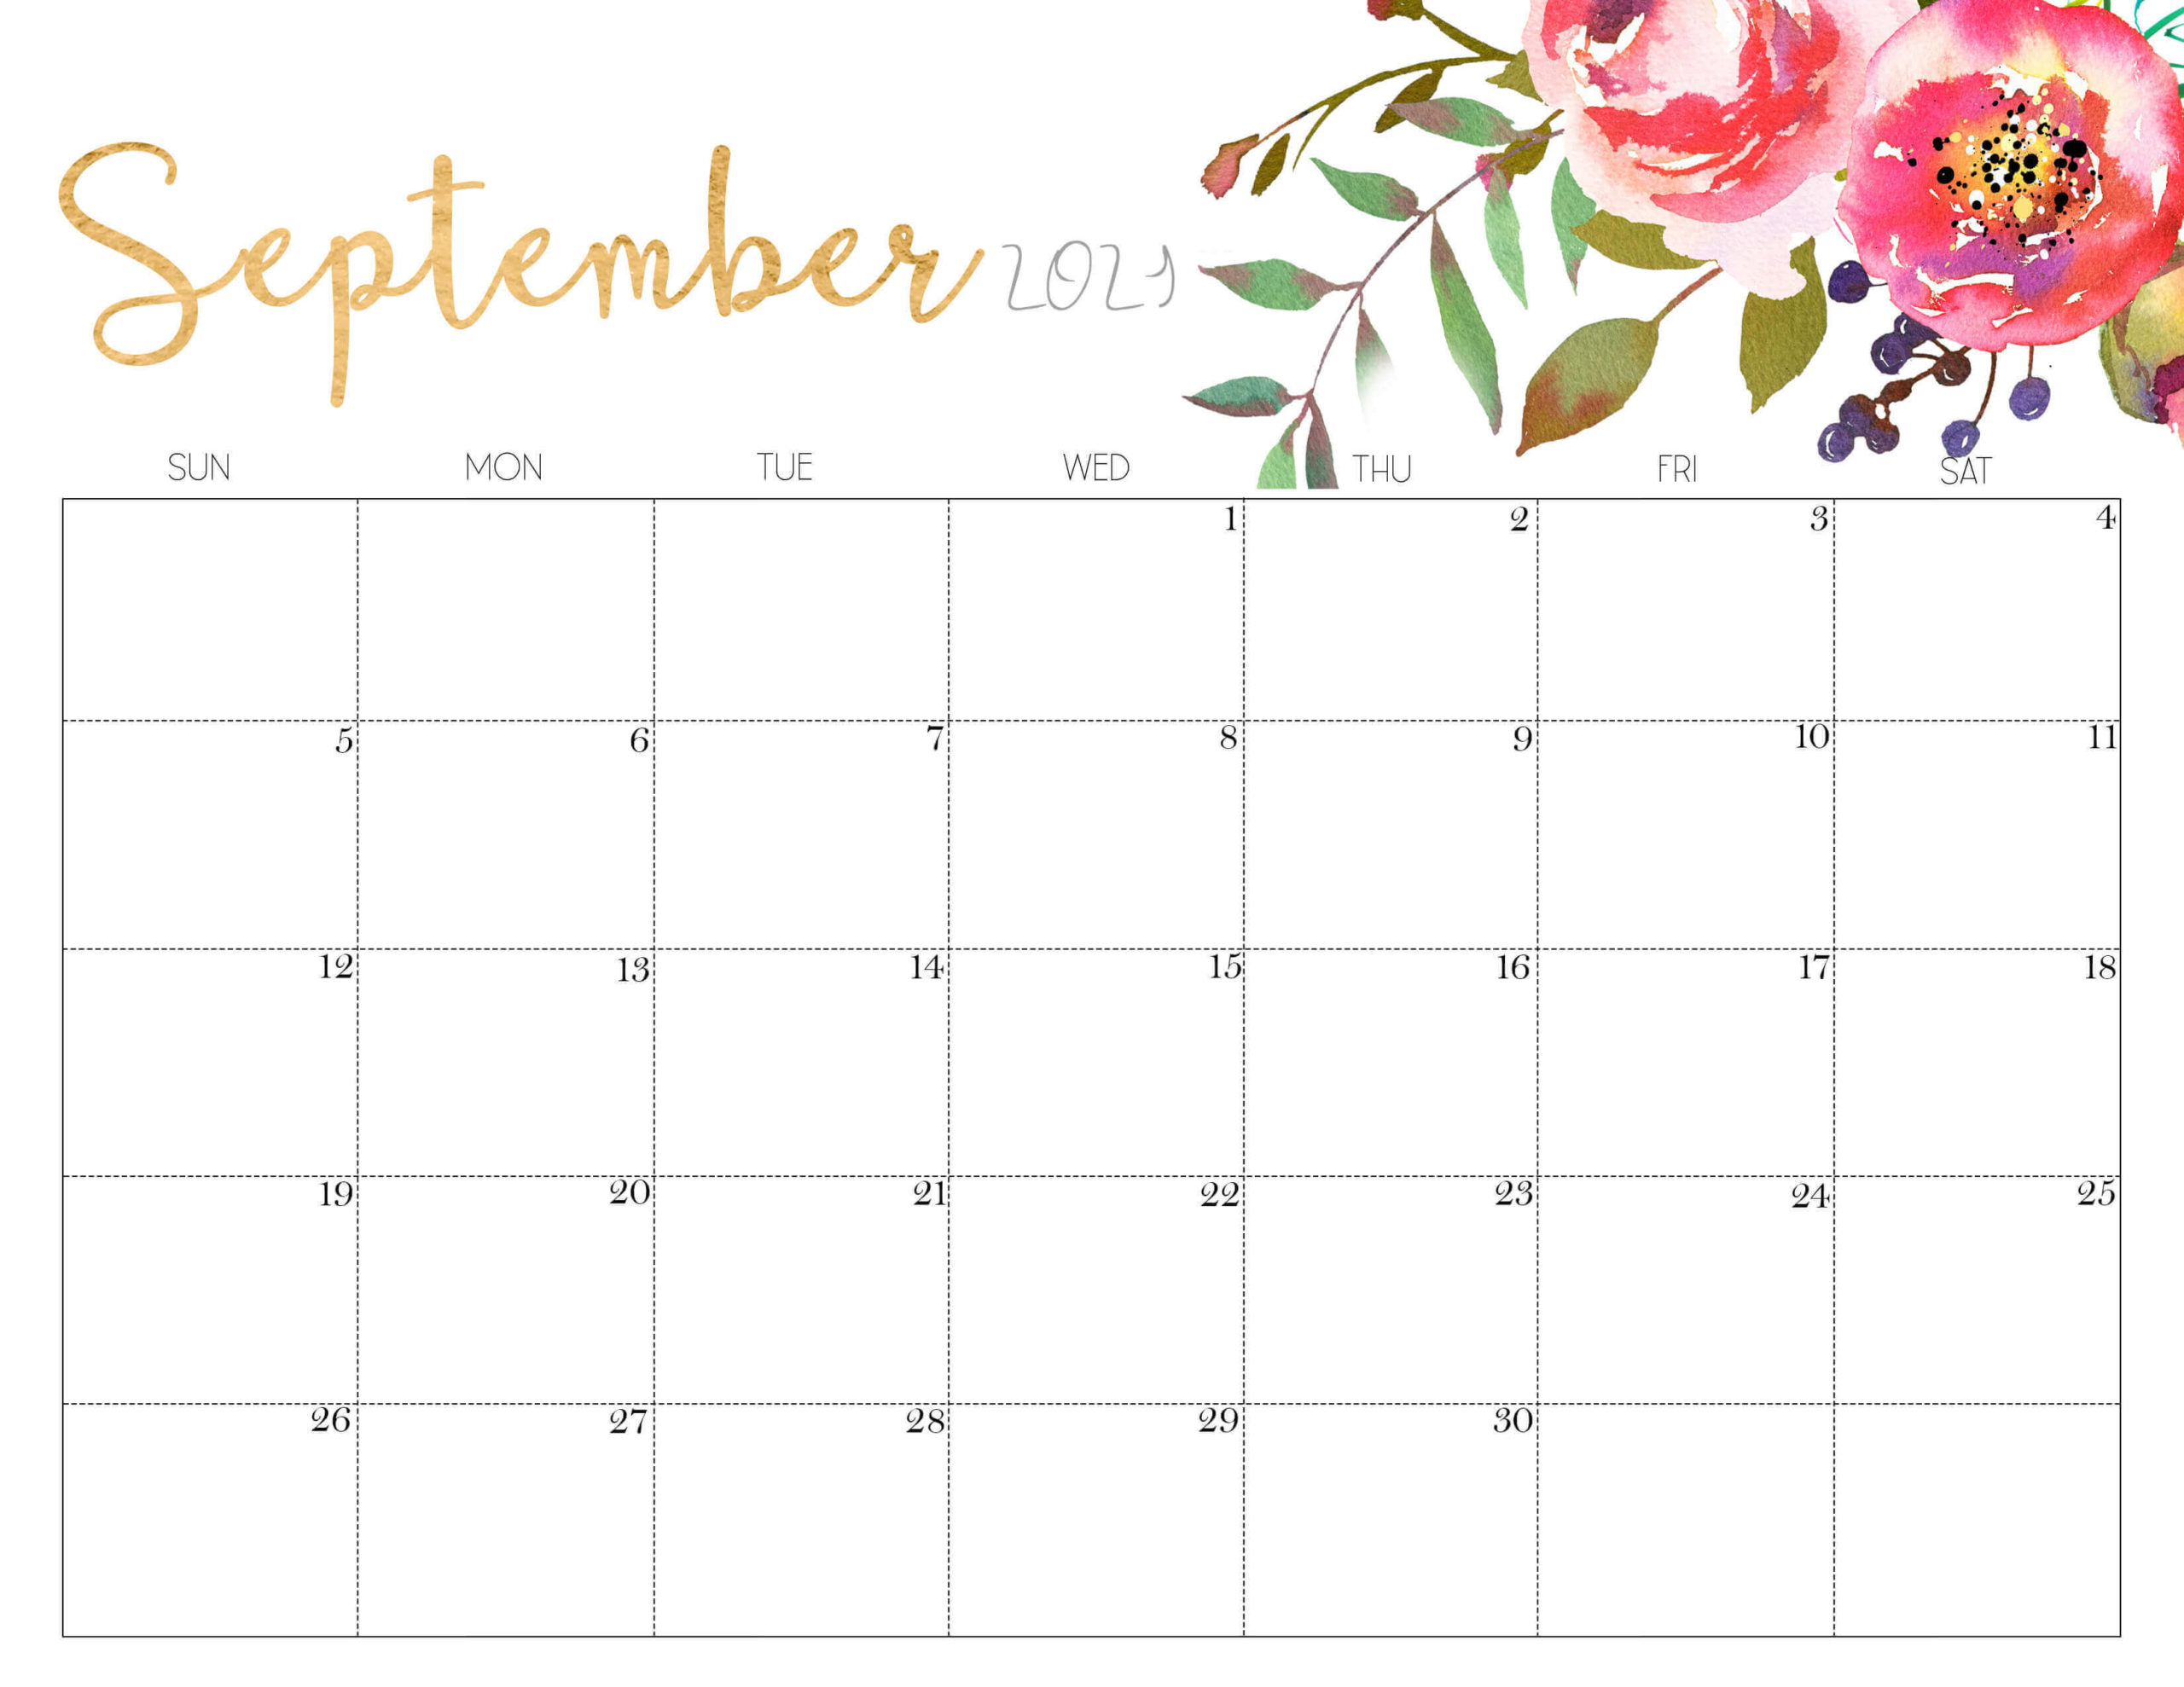 Floral September 2021 Calendar